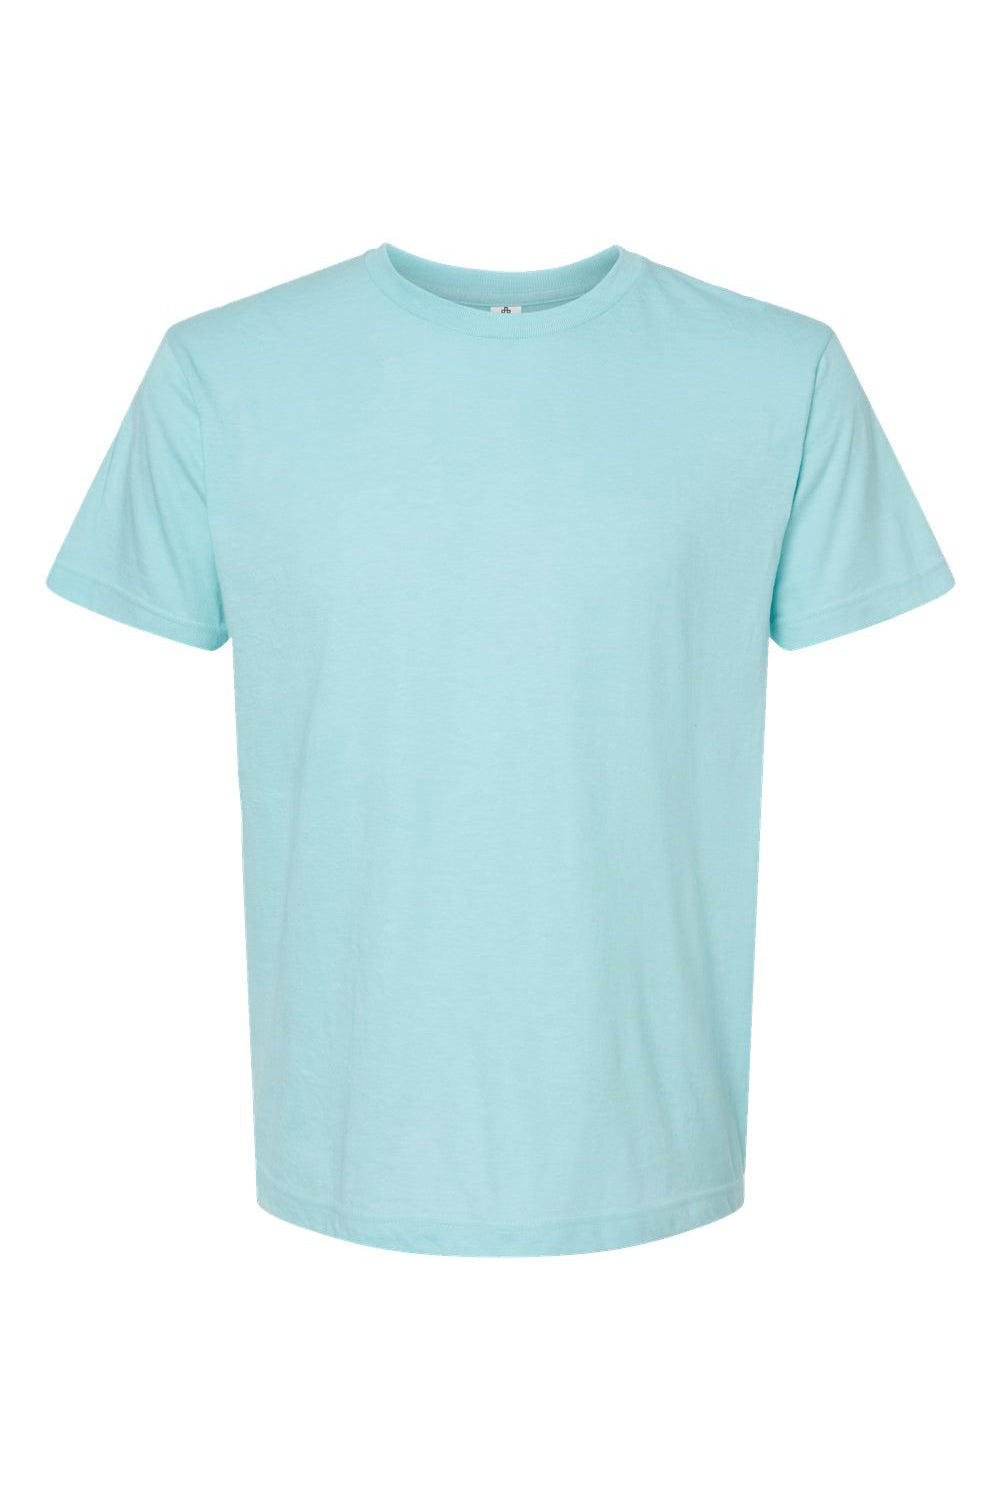 Tultex 202 Mens Fine Jersey Short Sleeve Crewneck T-Shirt Heather Purist Blue Flat Front